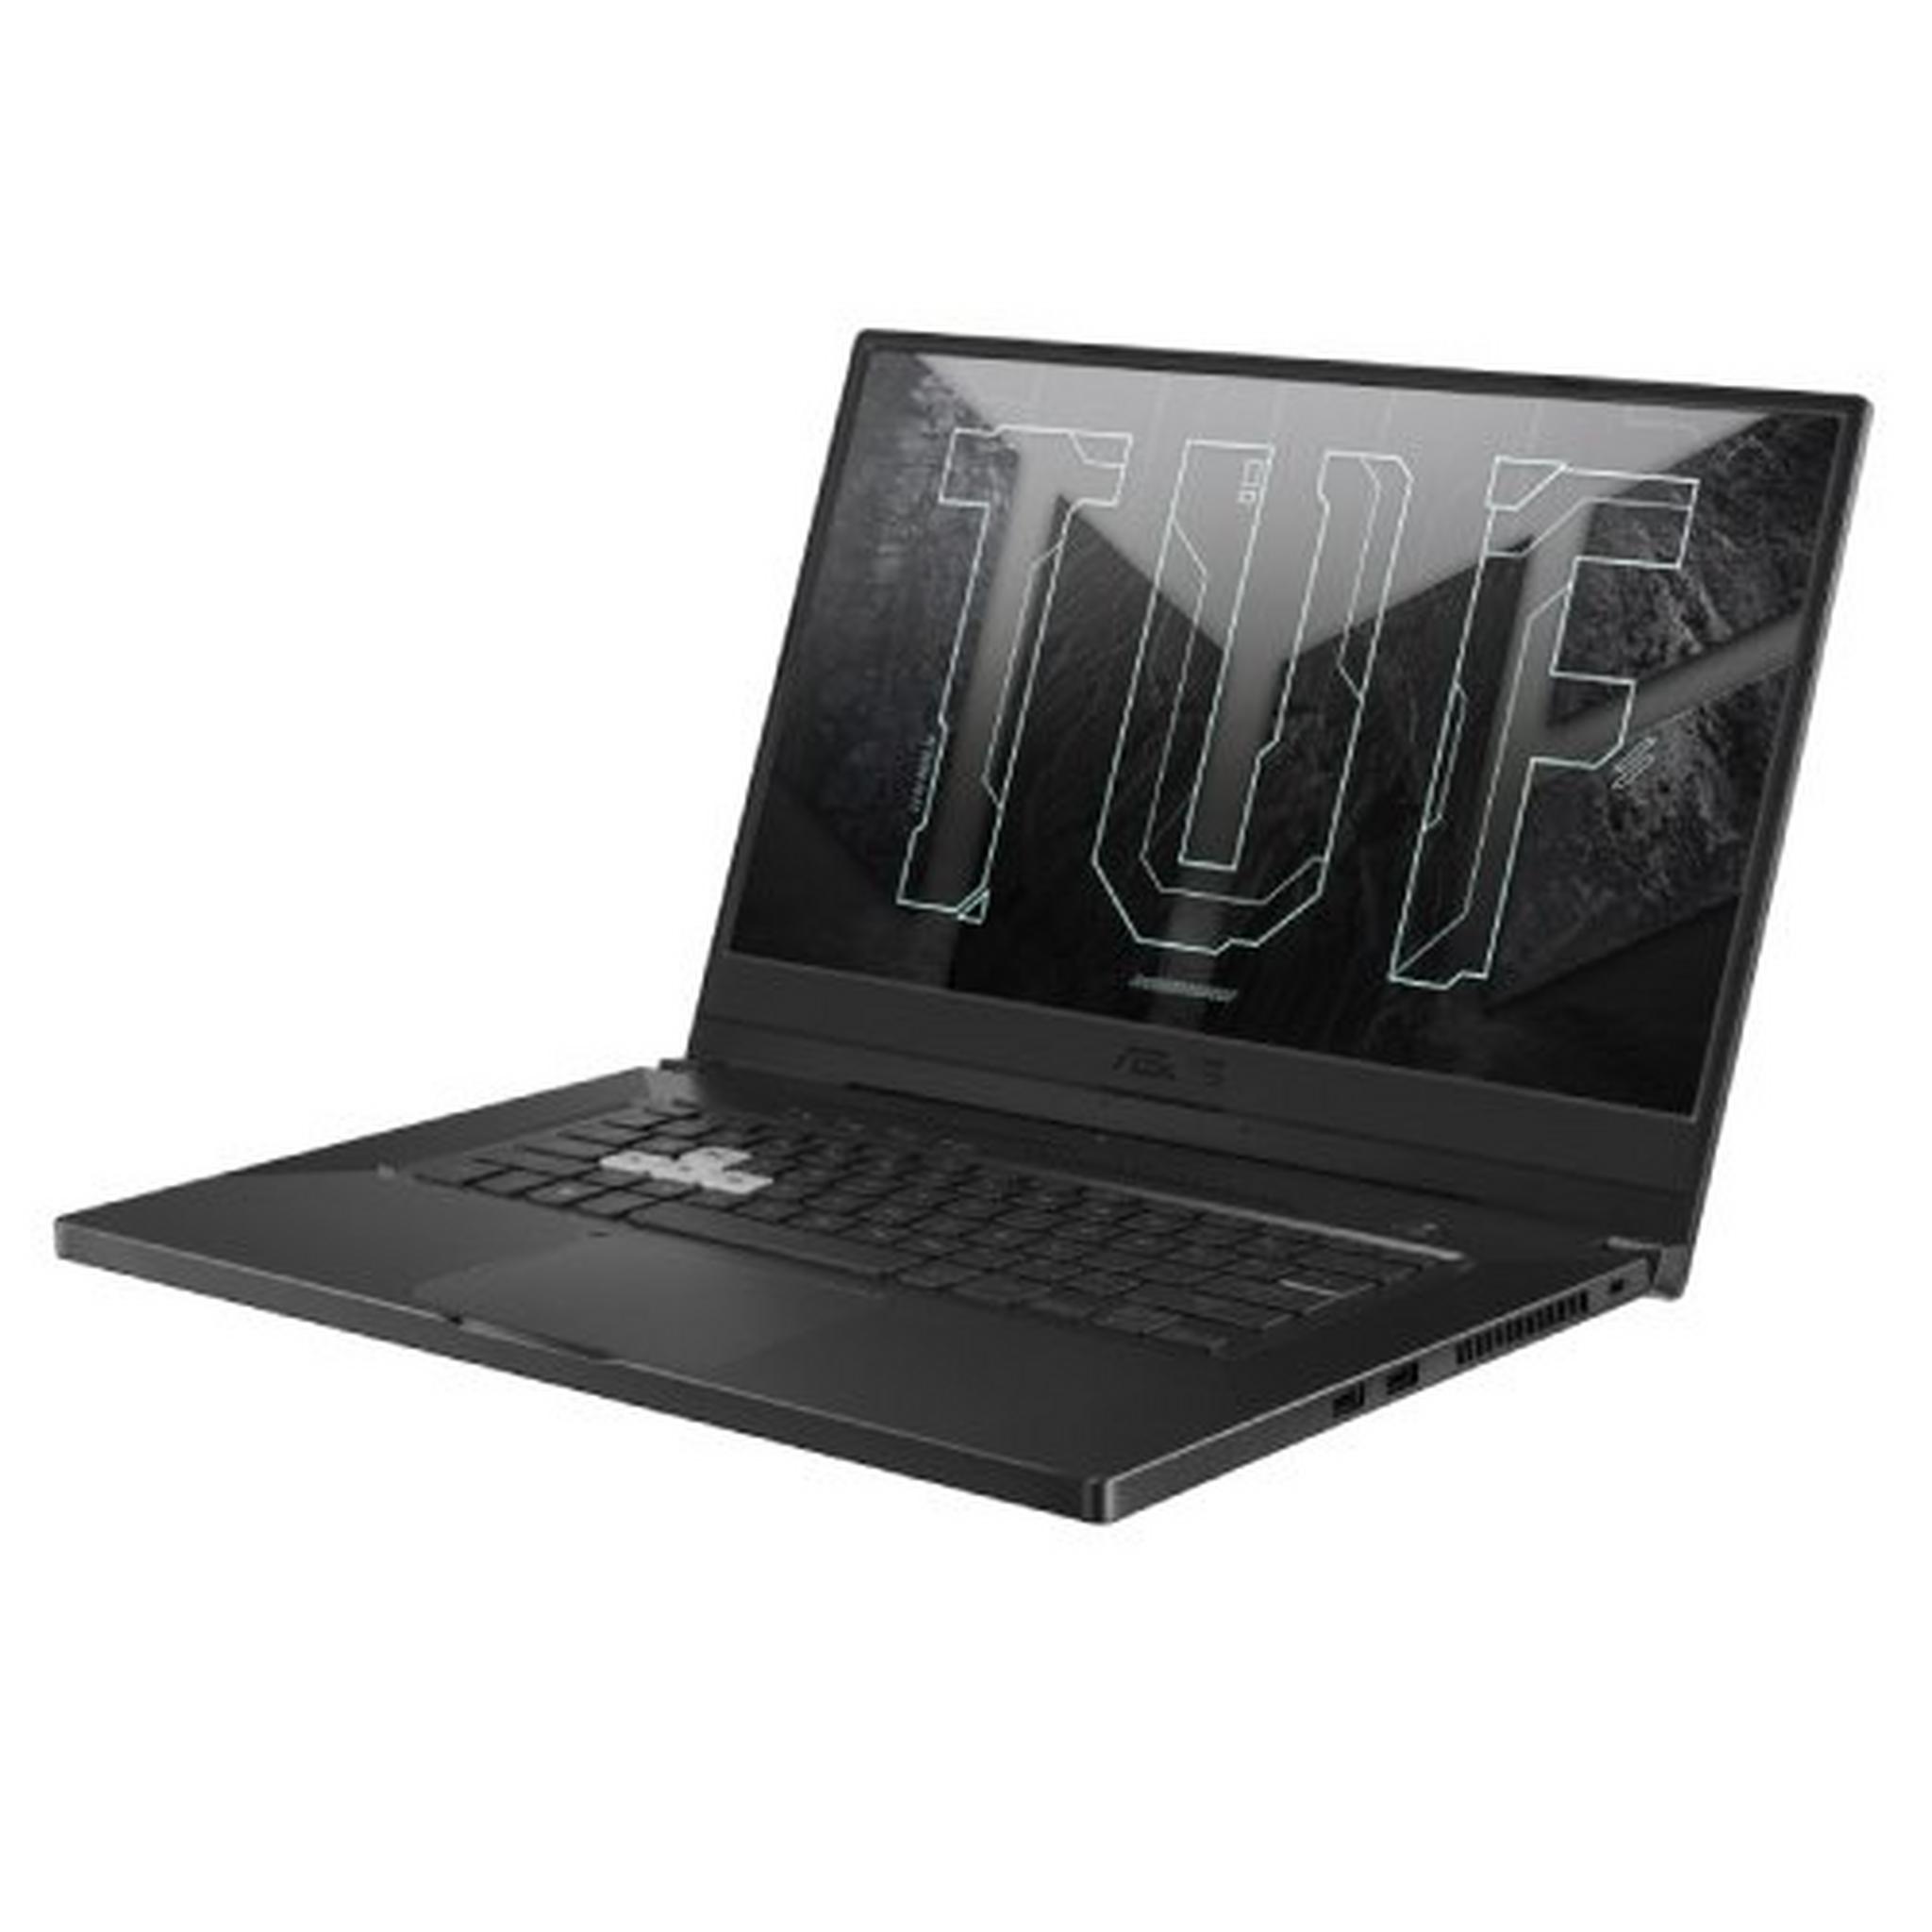 Asus TUF Dash F15 (2021), Core i7, Nvidia Geforce RTX 3060 6GB, RAM 16GB, SSD 1TB, 15.6" FHD 240Hz Gaming Laptop - Eclipse Gray (FX516PM-AZ003T)